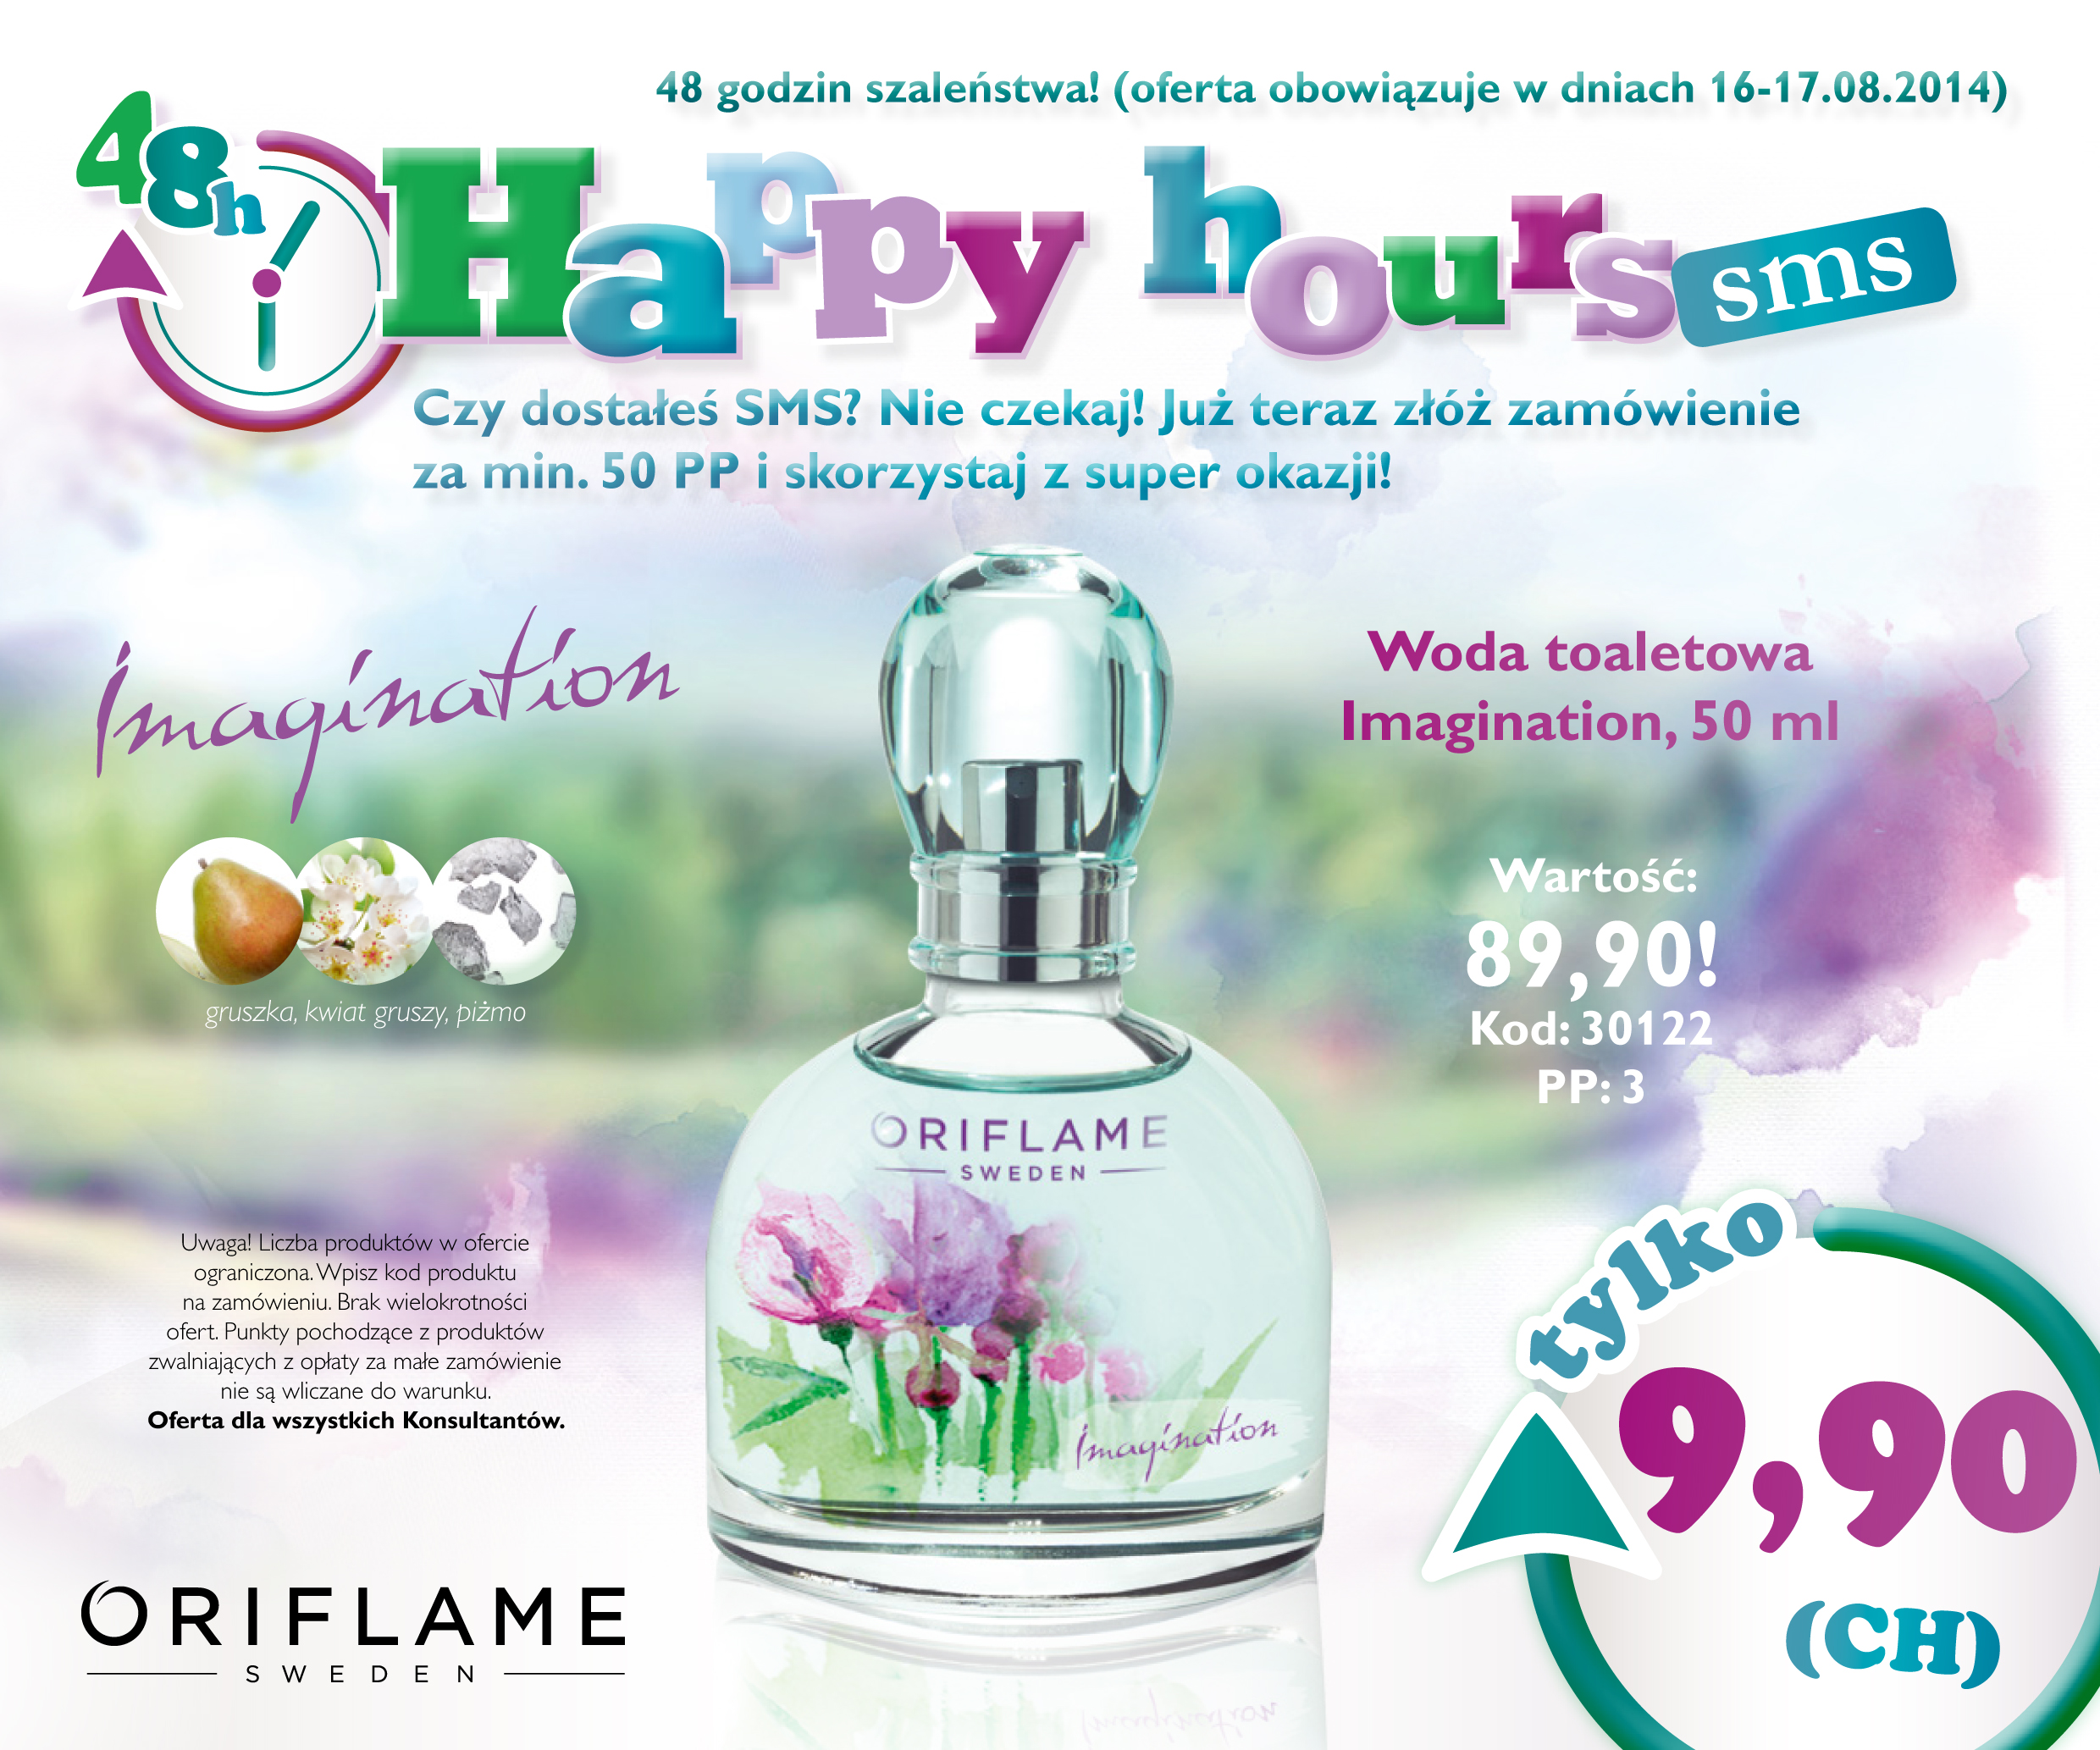 Katalog Oriflame 11 2014 oferta na 48 godzin 2